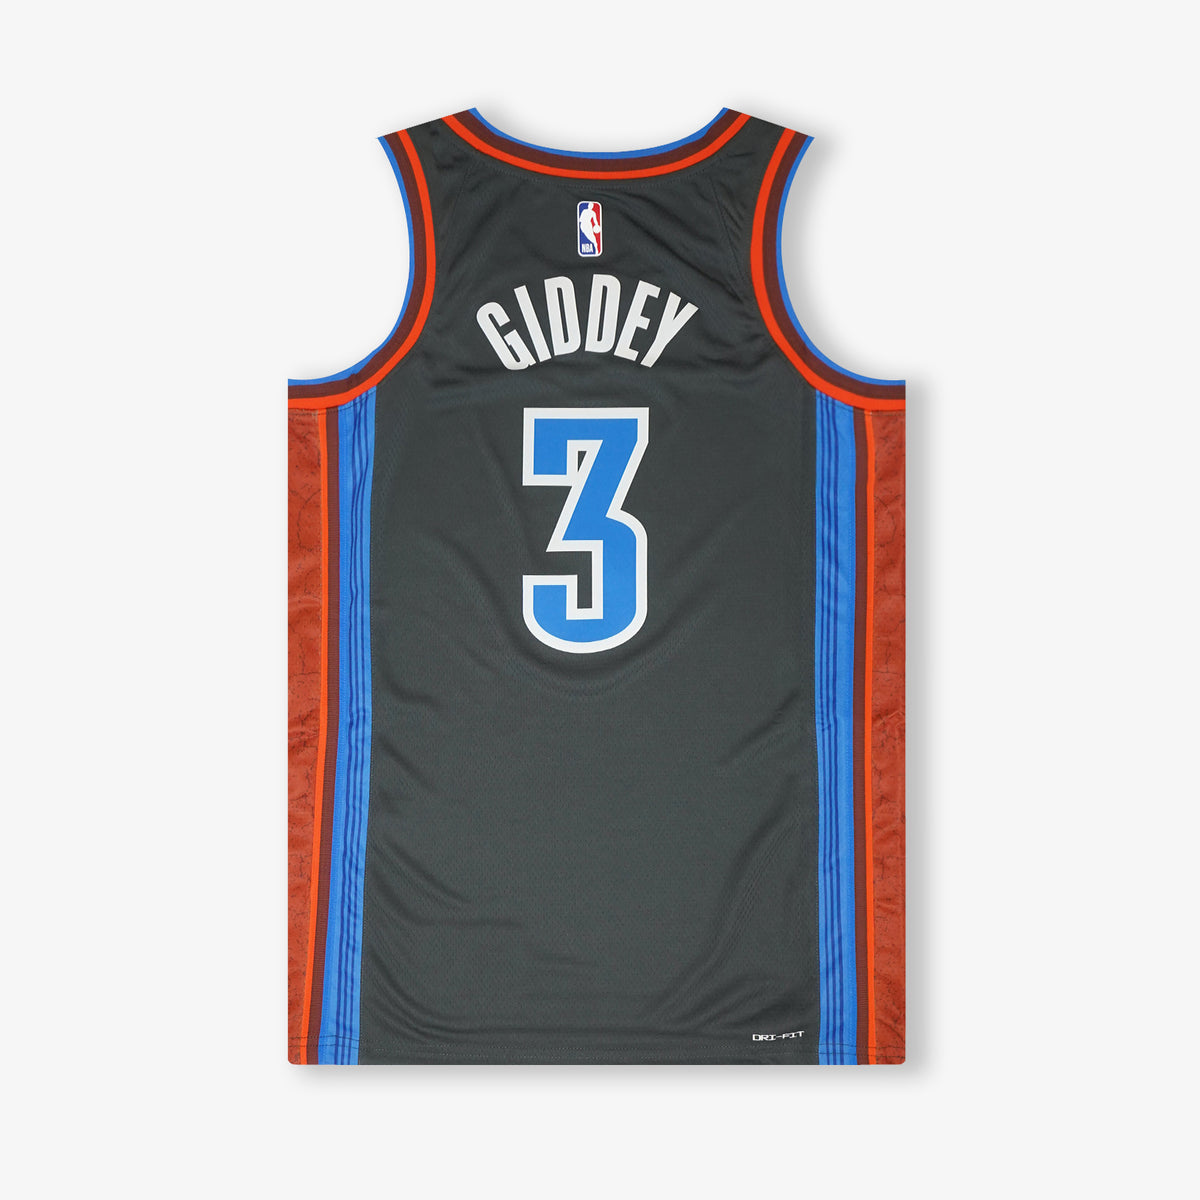 Kids - Nike NBA City Edition Oklahoma City Thunder Hoodie